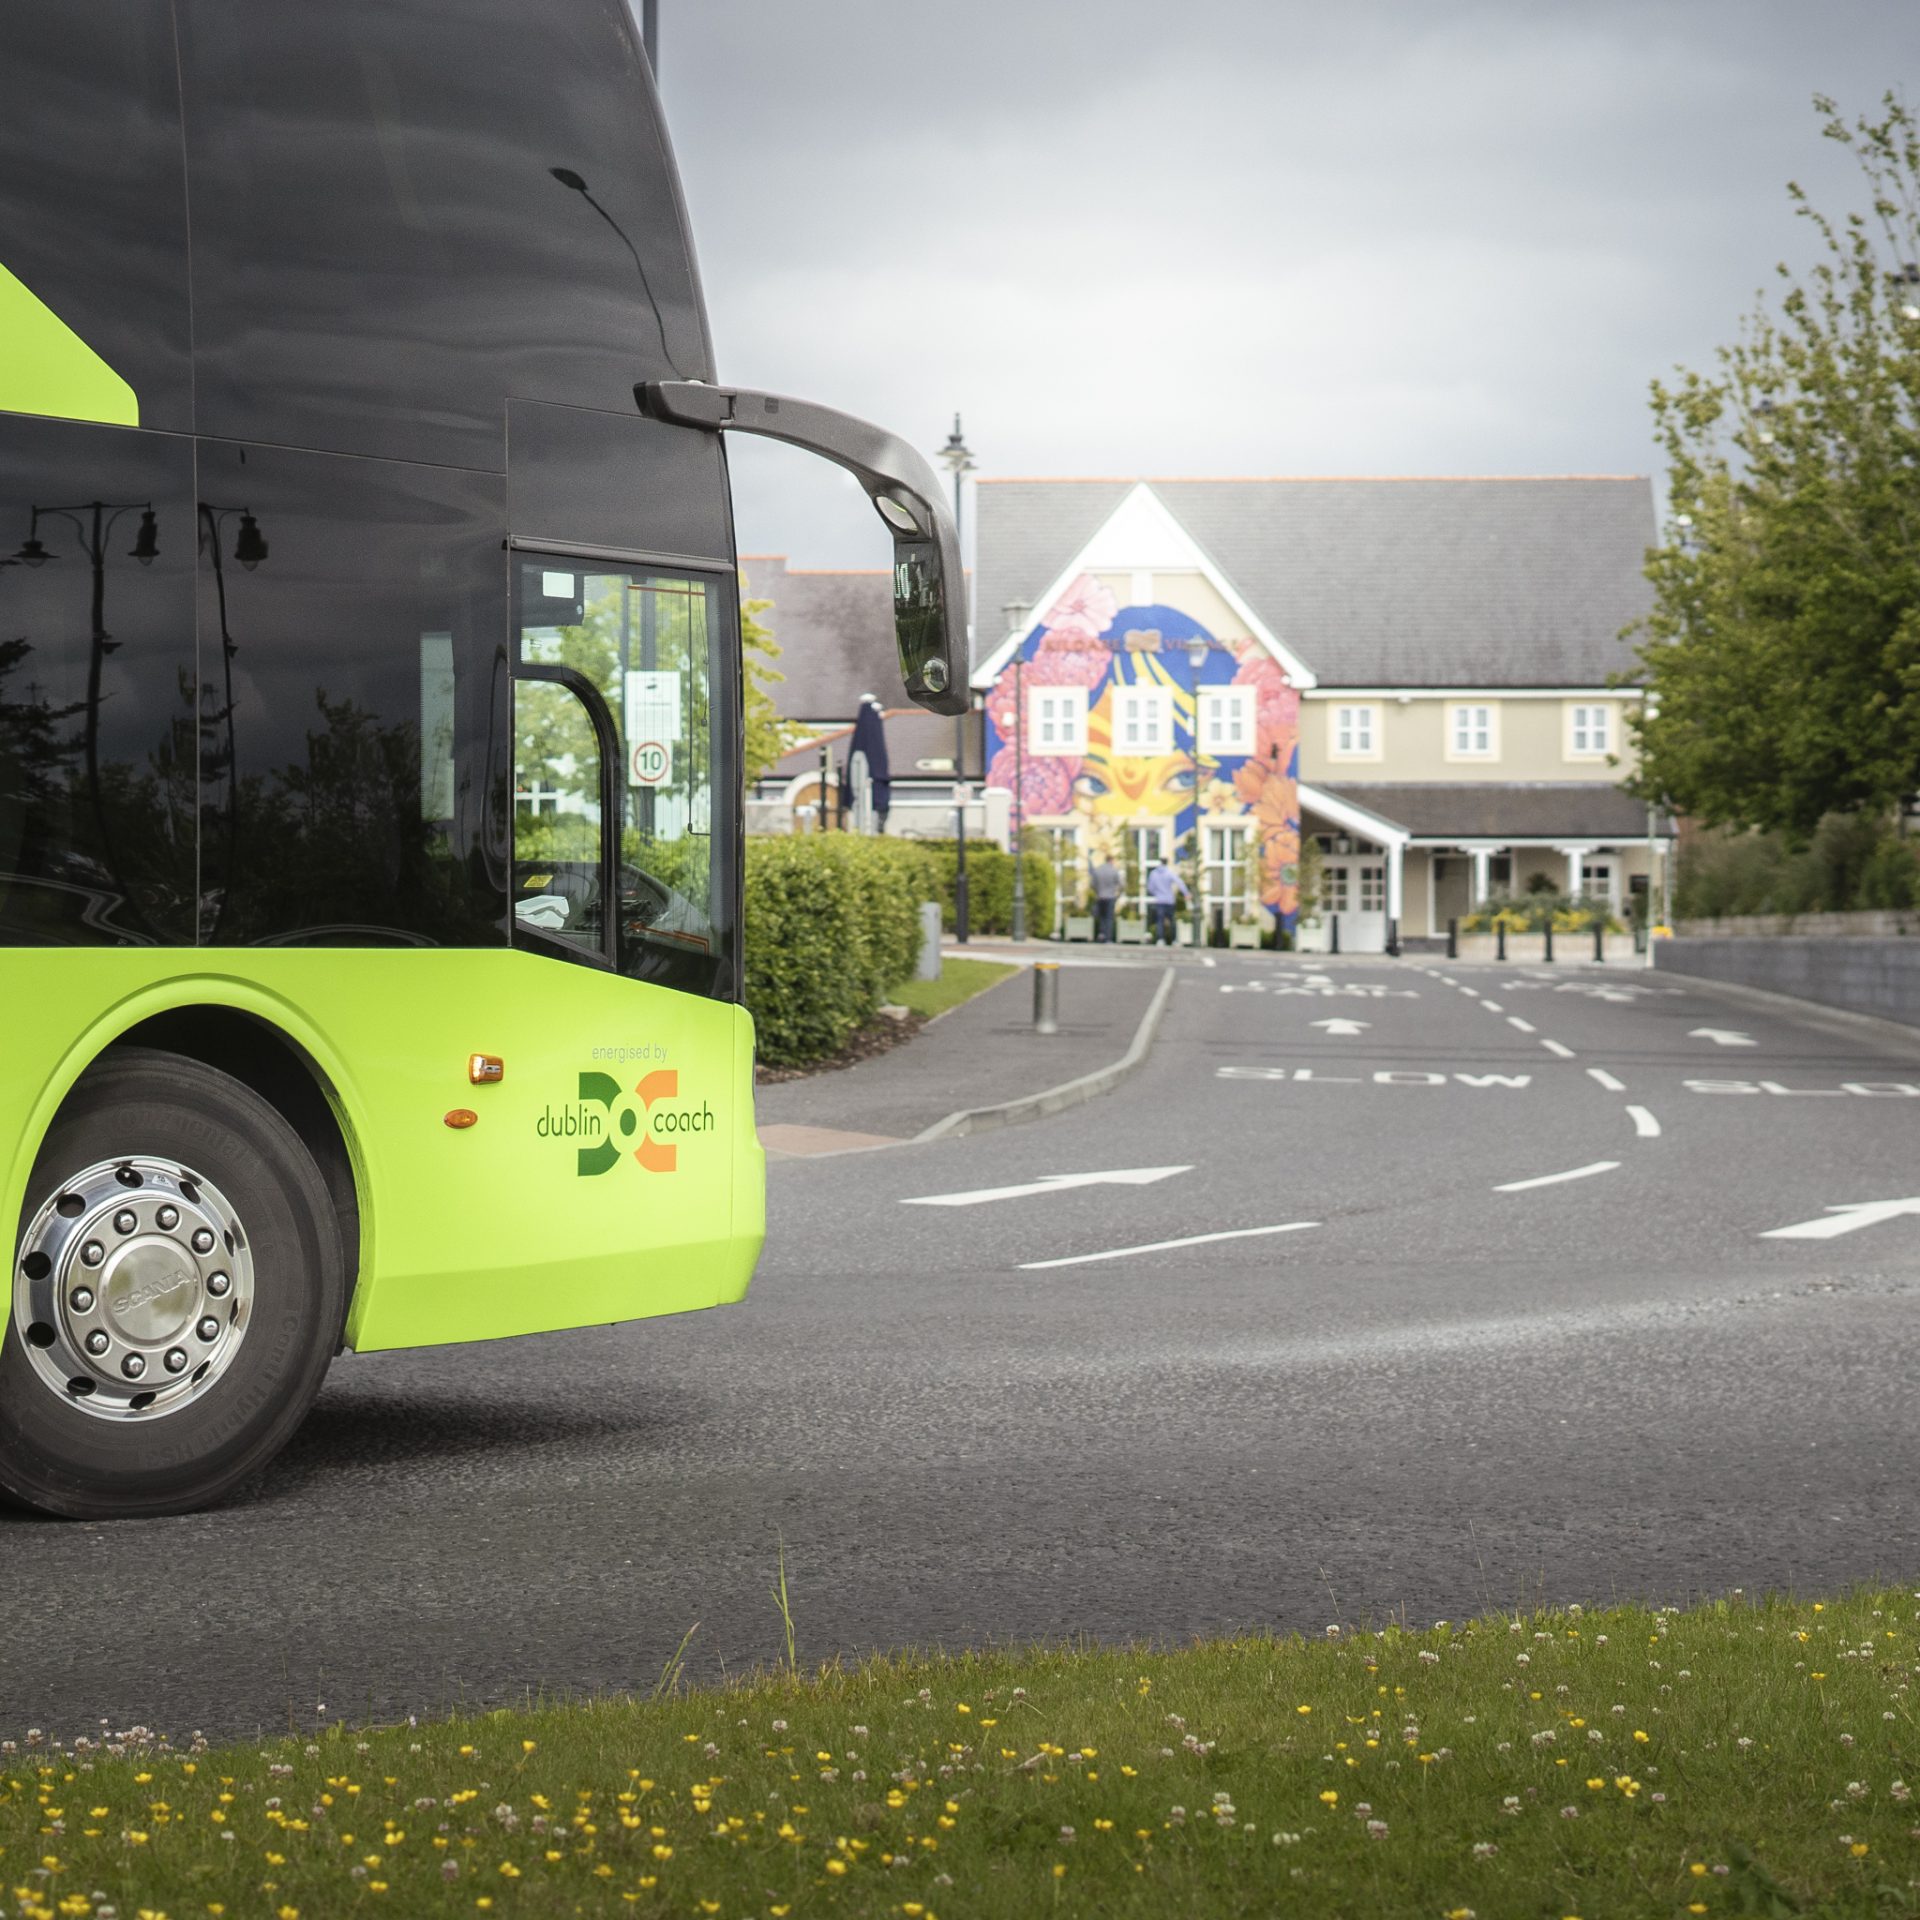 Go Shopping with the Big Green Bus - Dublin Coach